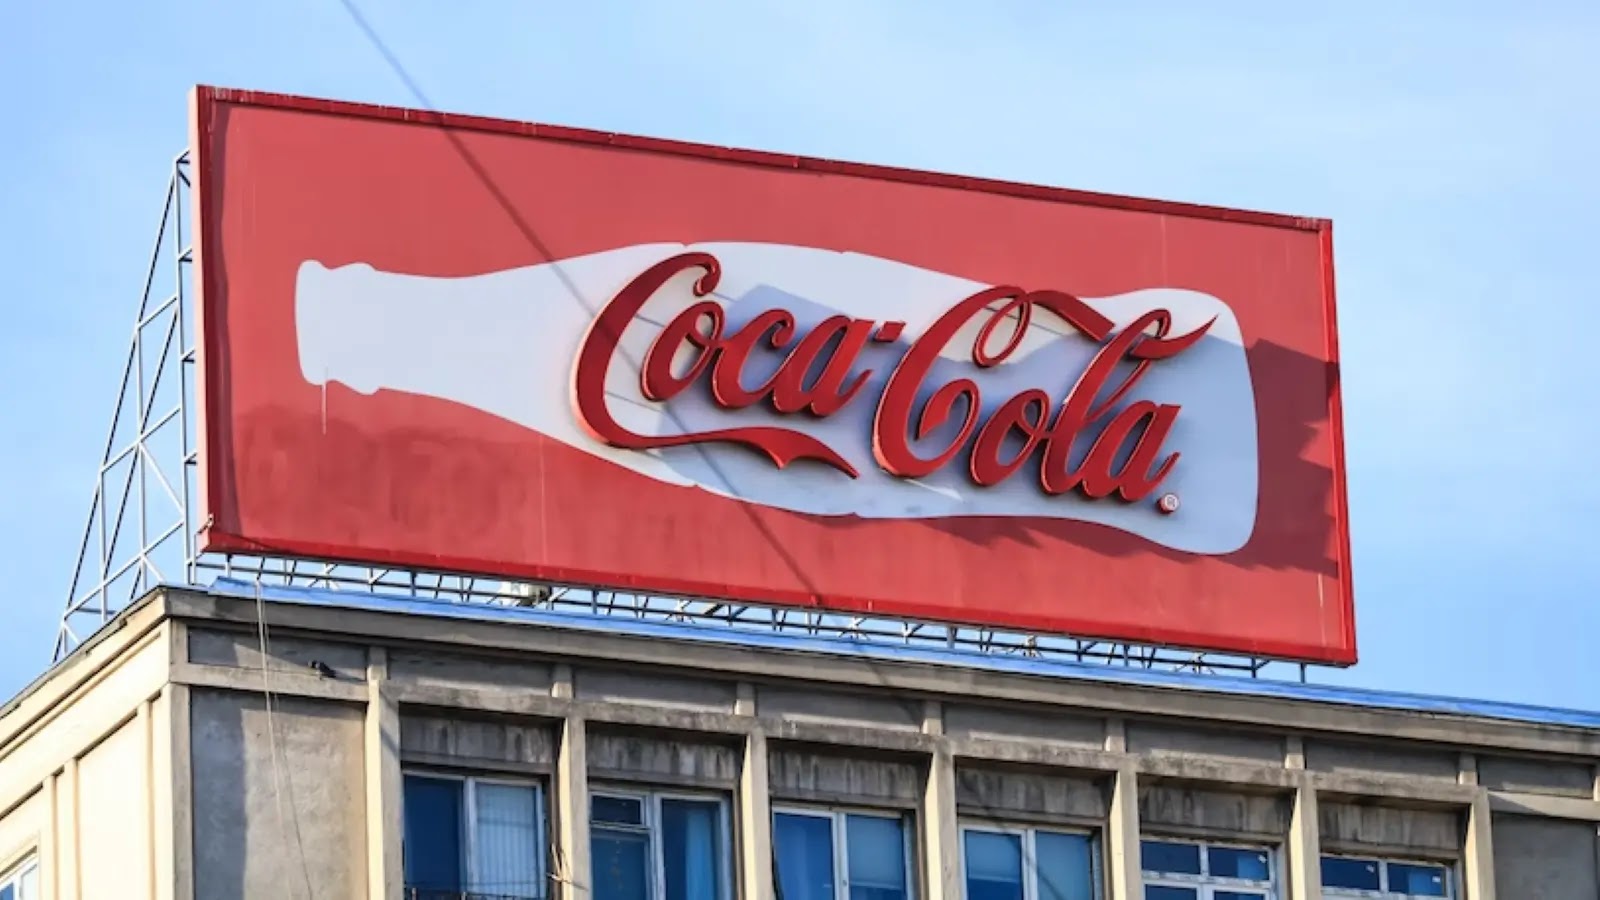 A Coca-Cola billboard advertisement.